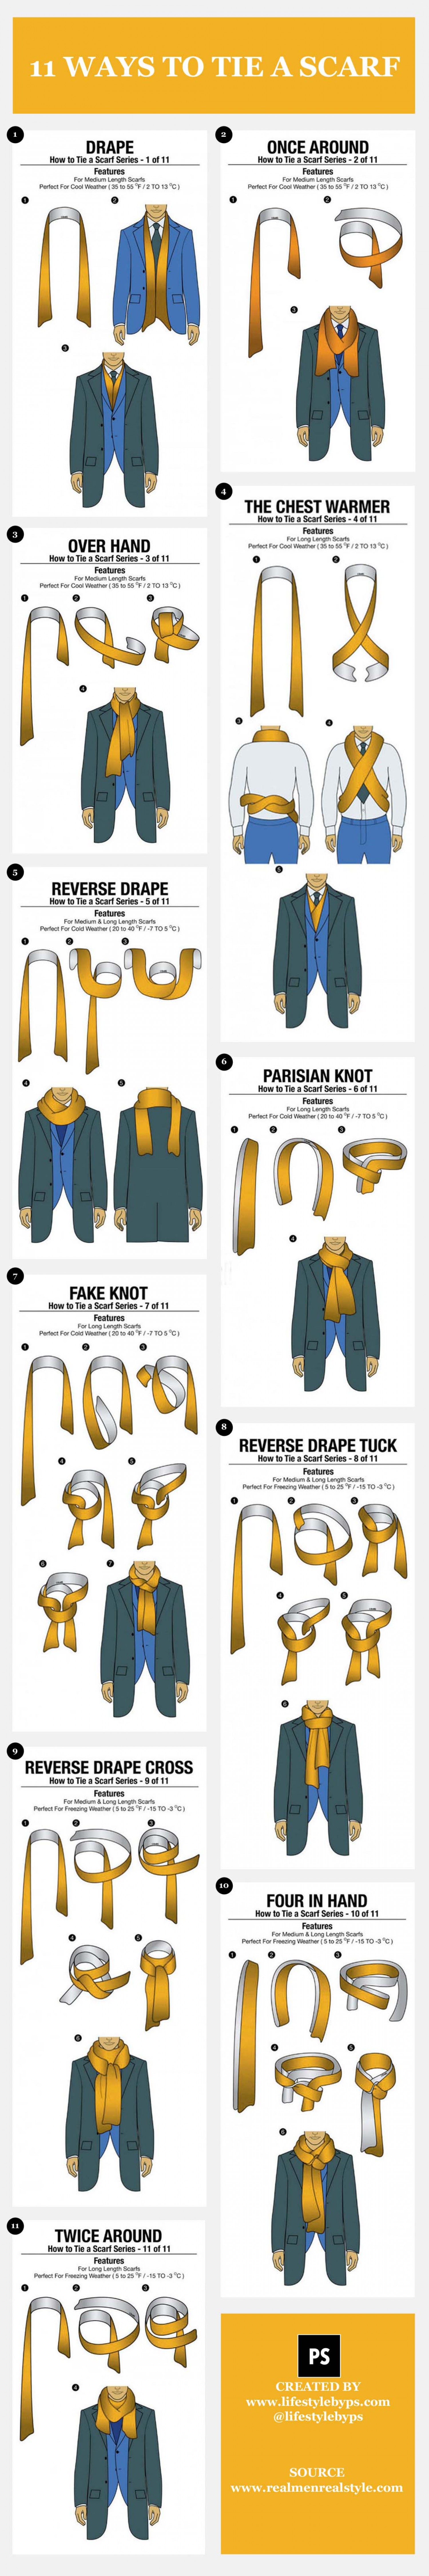 11-simple-ways-to-tie-a-scarf.jpg